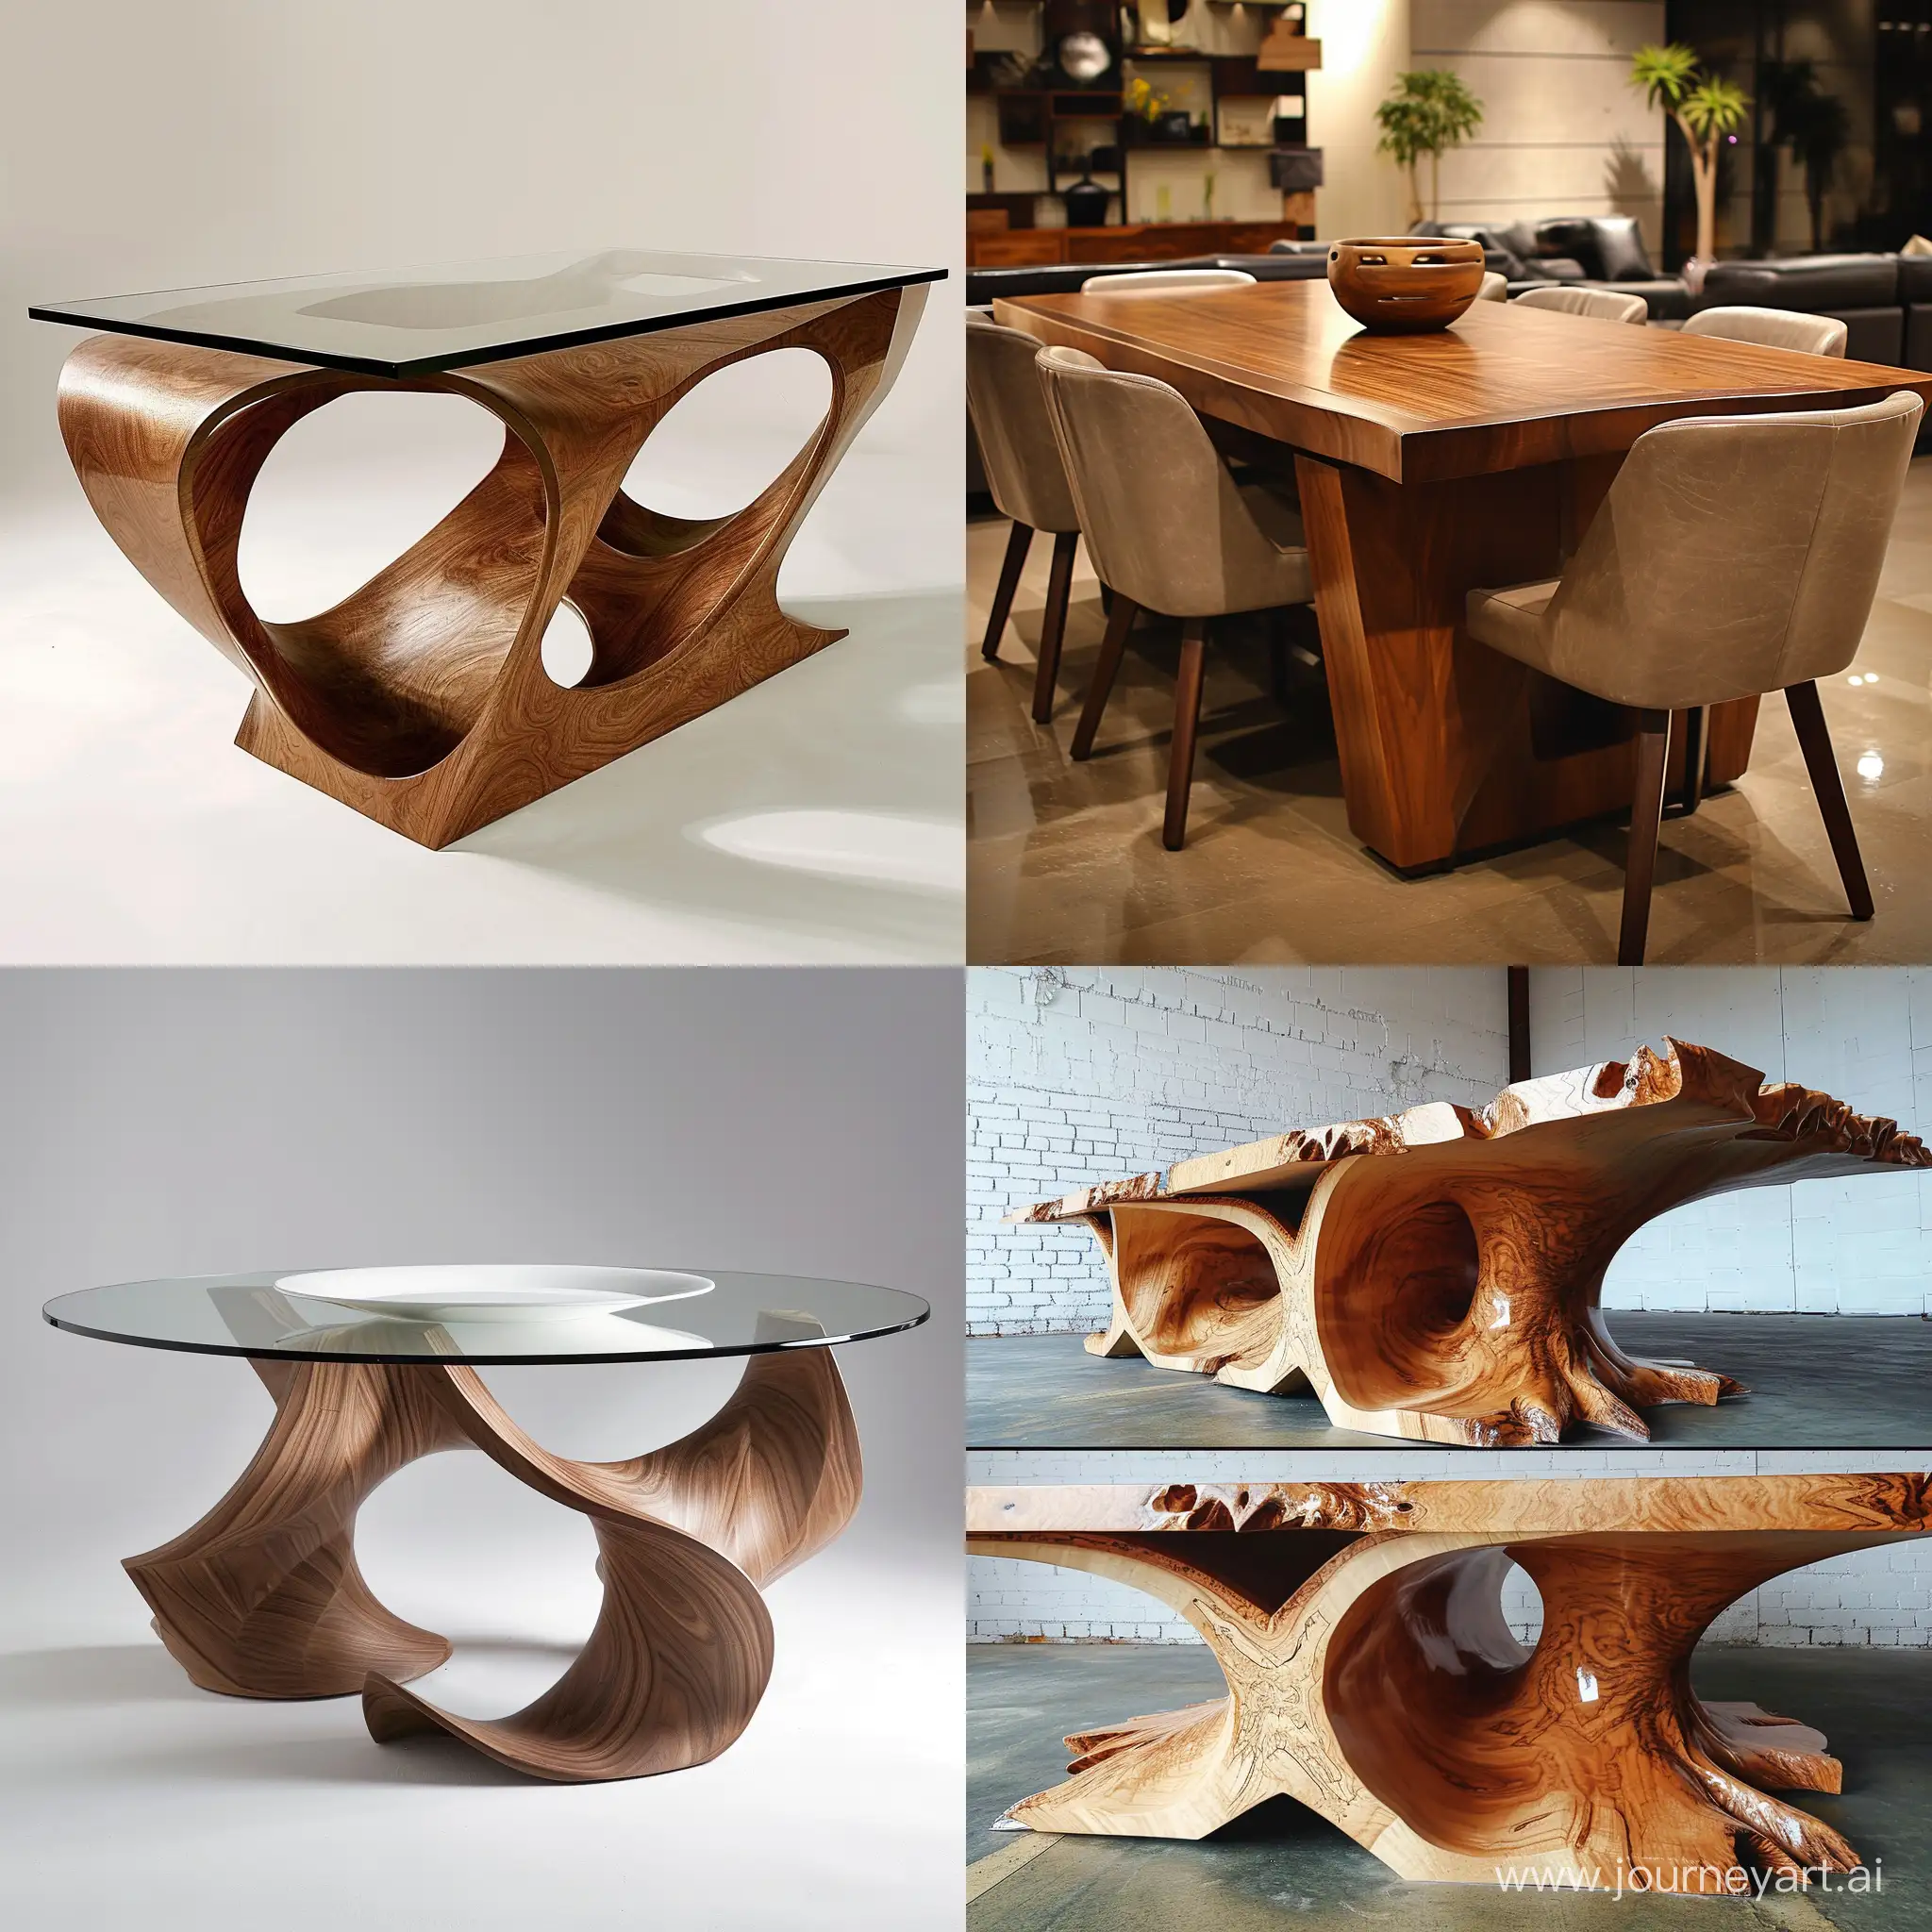 Design a furniture dinner table